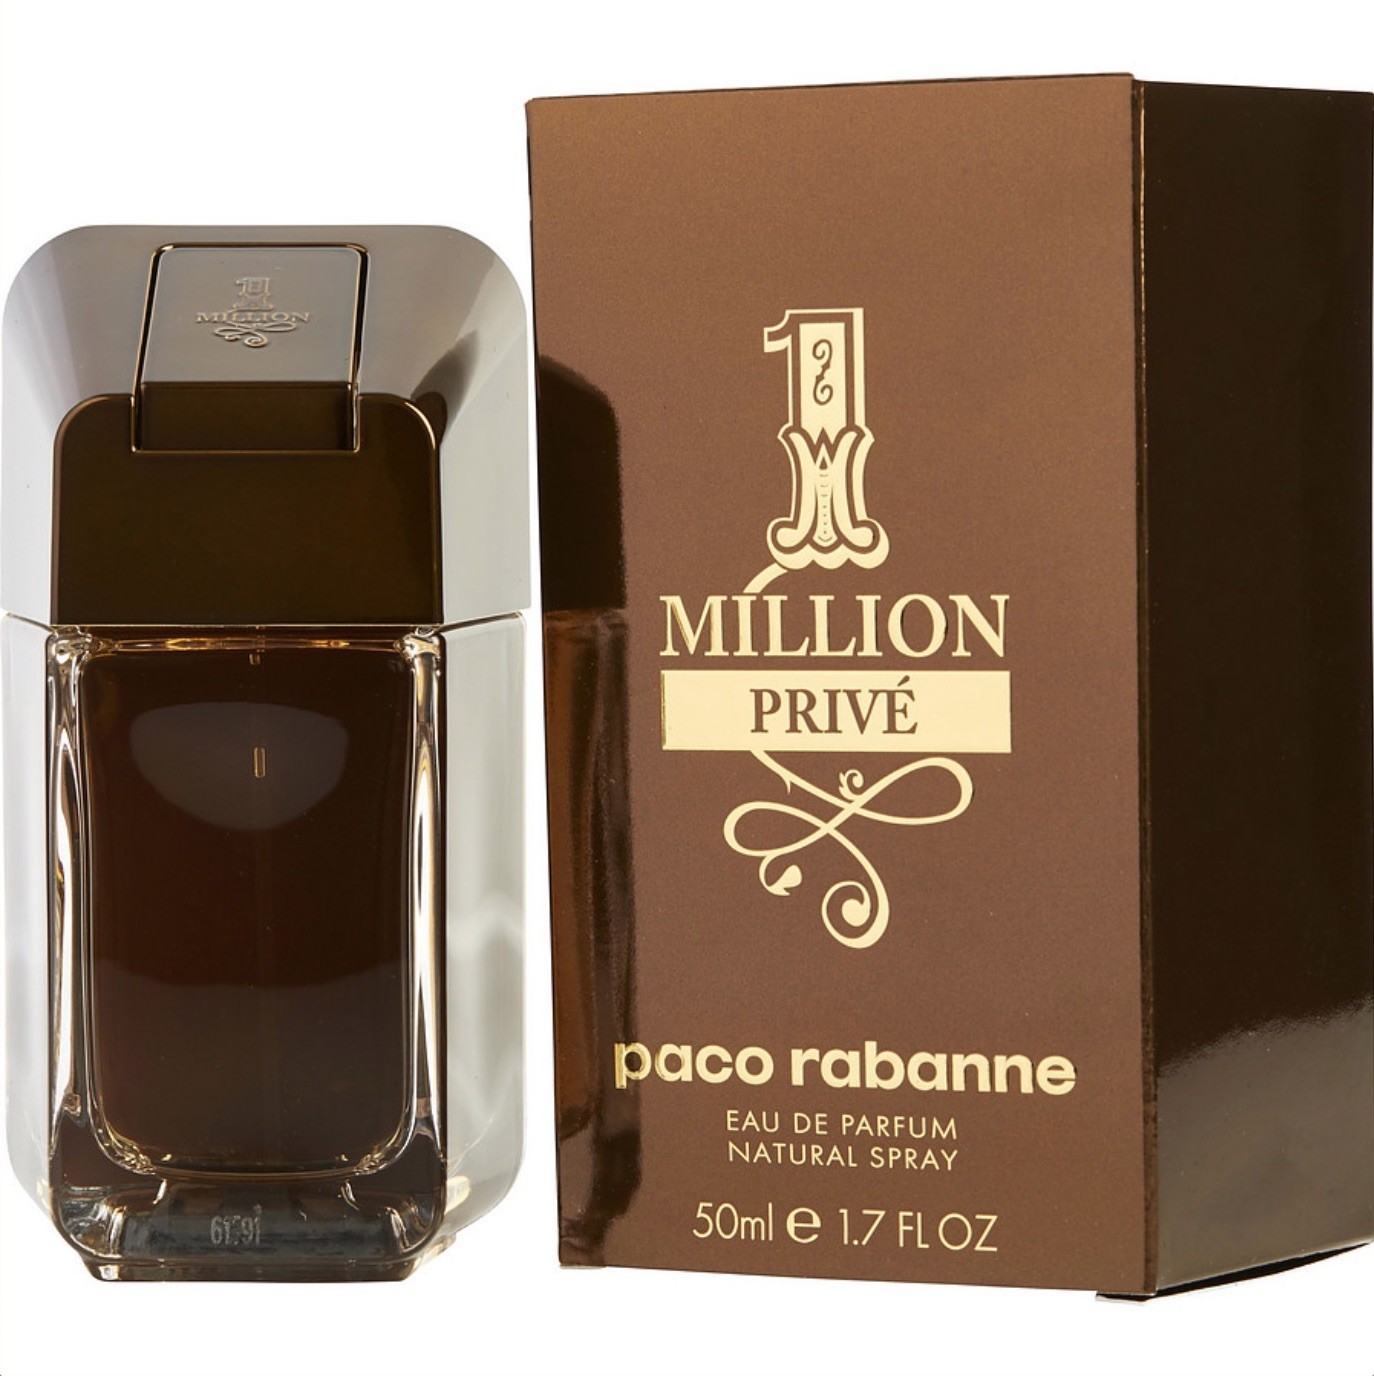 Paco Rabanne 1 million prive